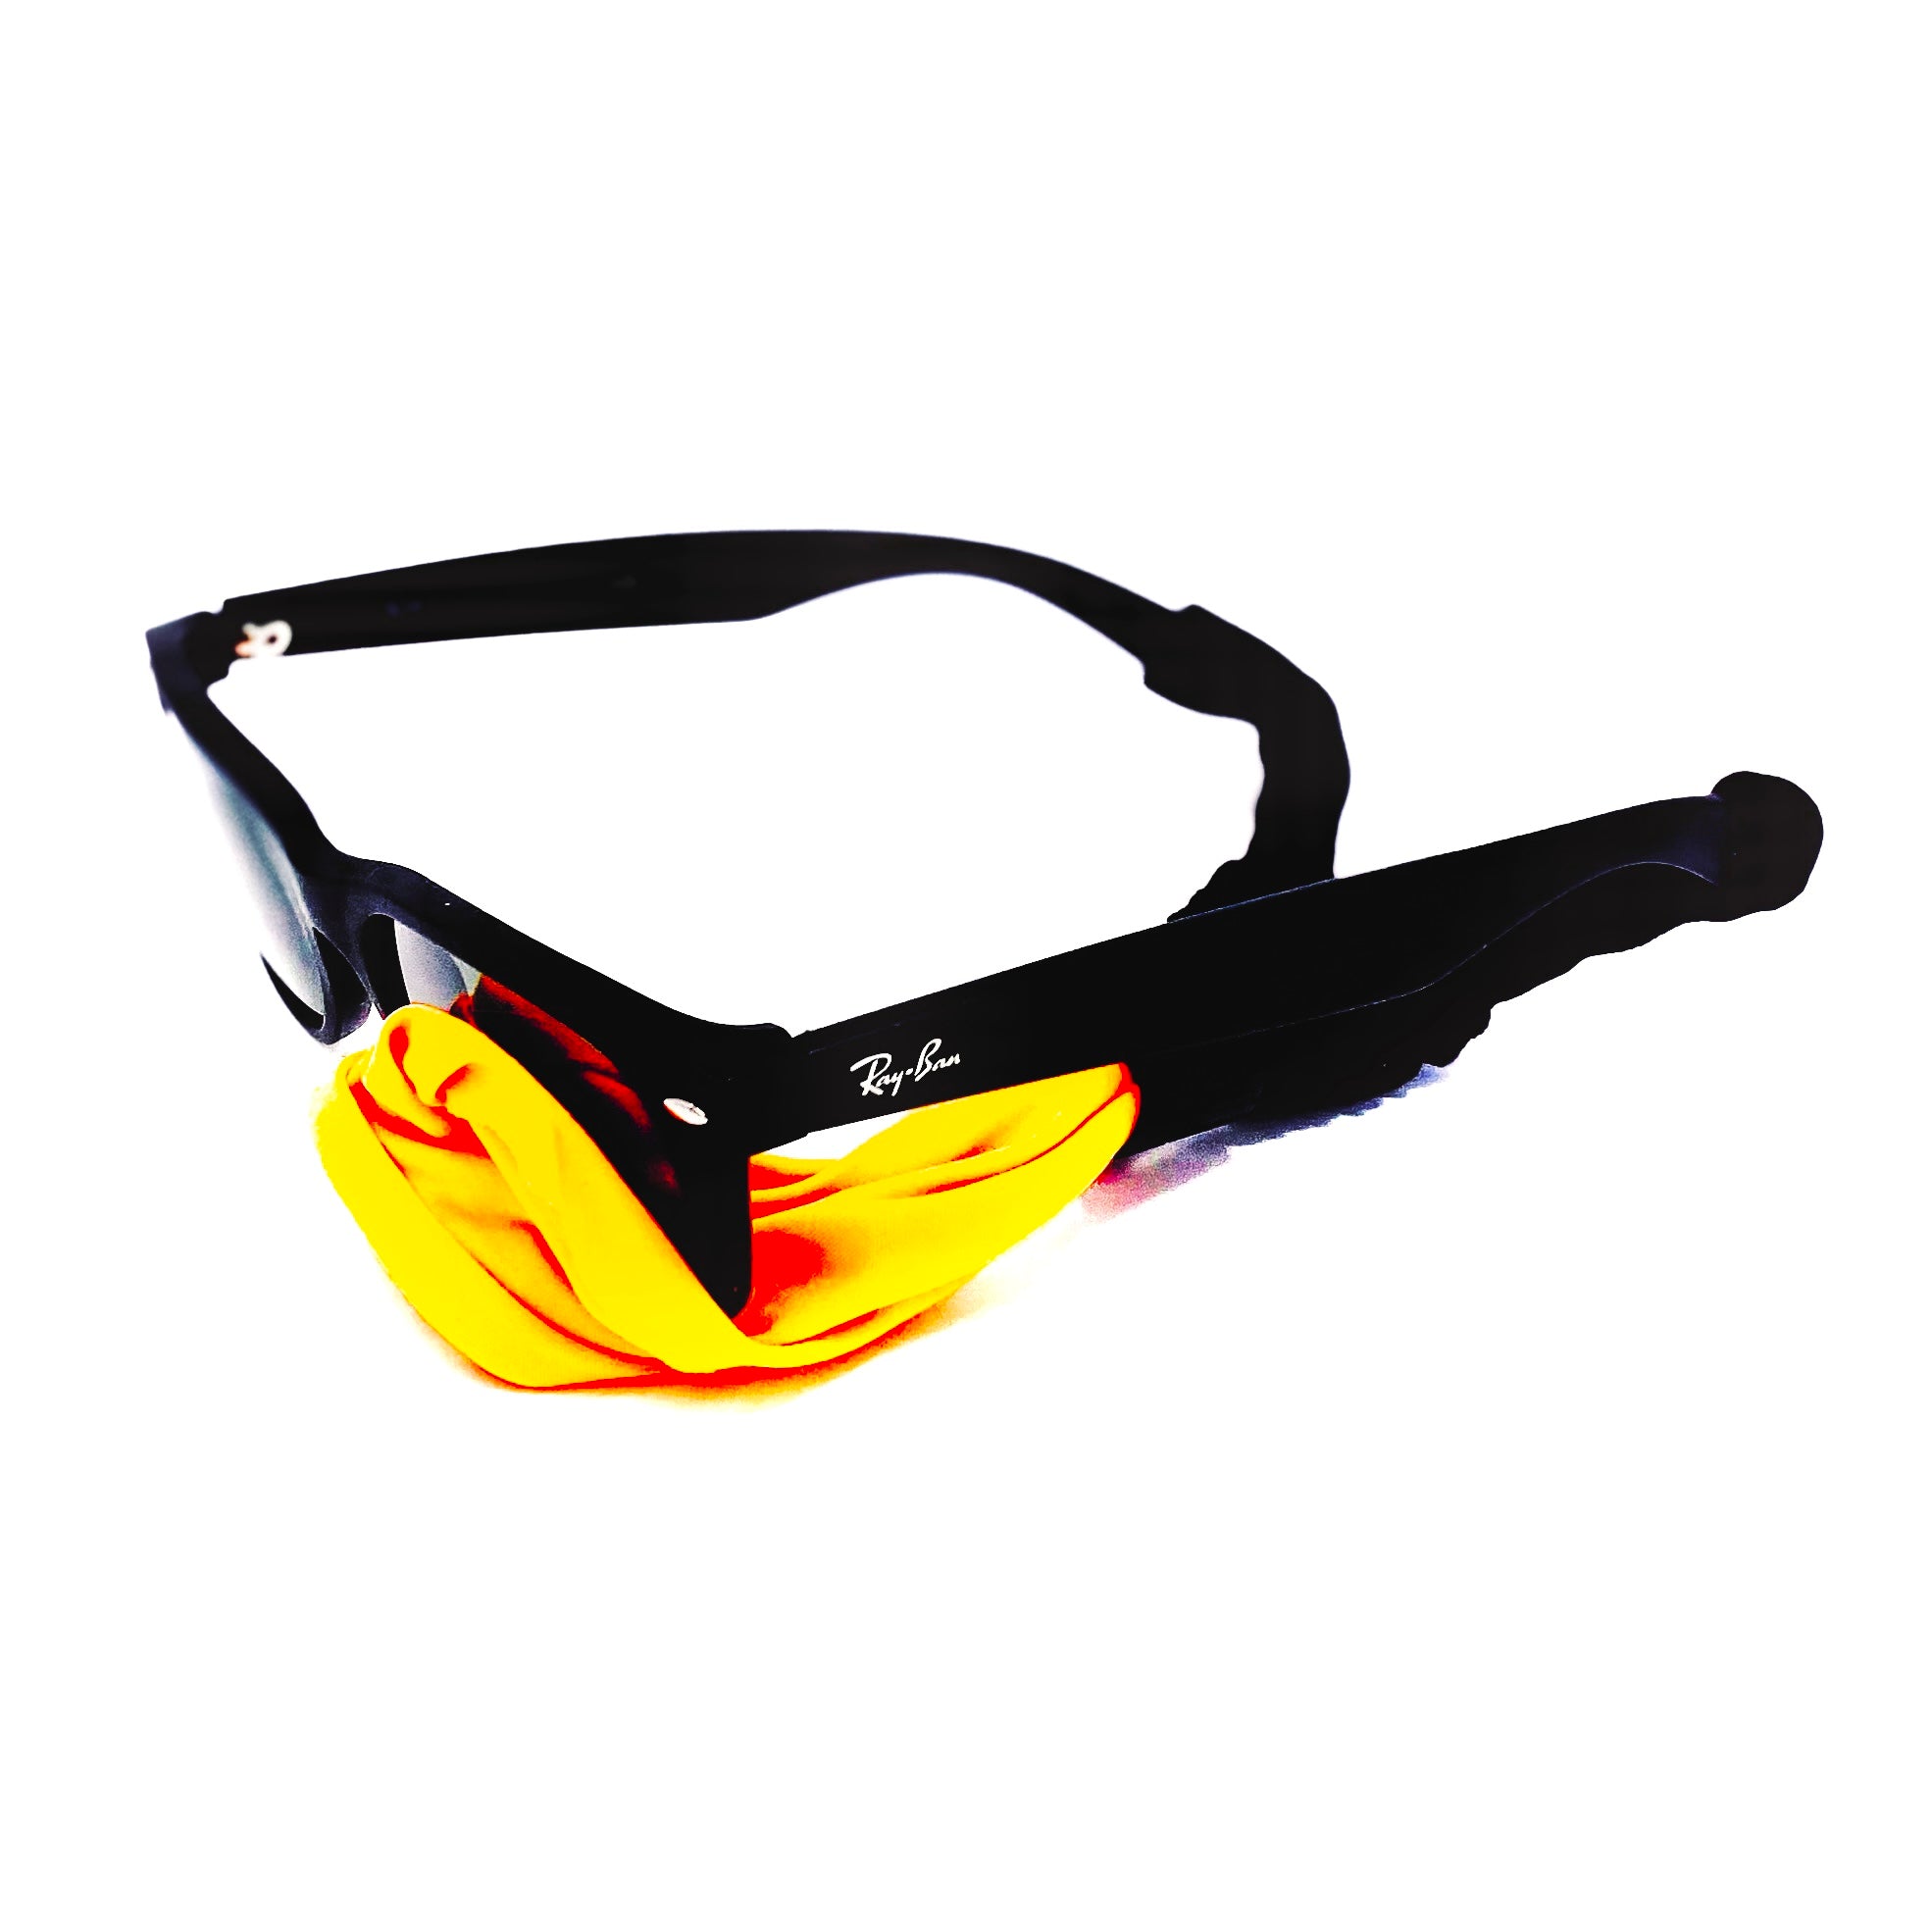 Costco Optical | Eyeglass Lanyard Comfortable Eye Wear Accessories Glasses  Chain Water Sports 